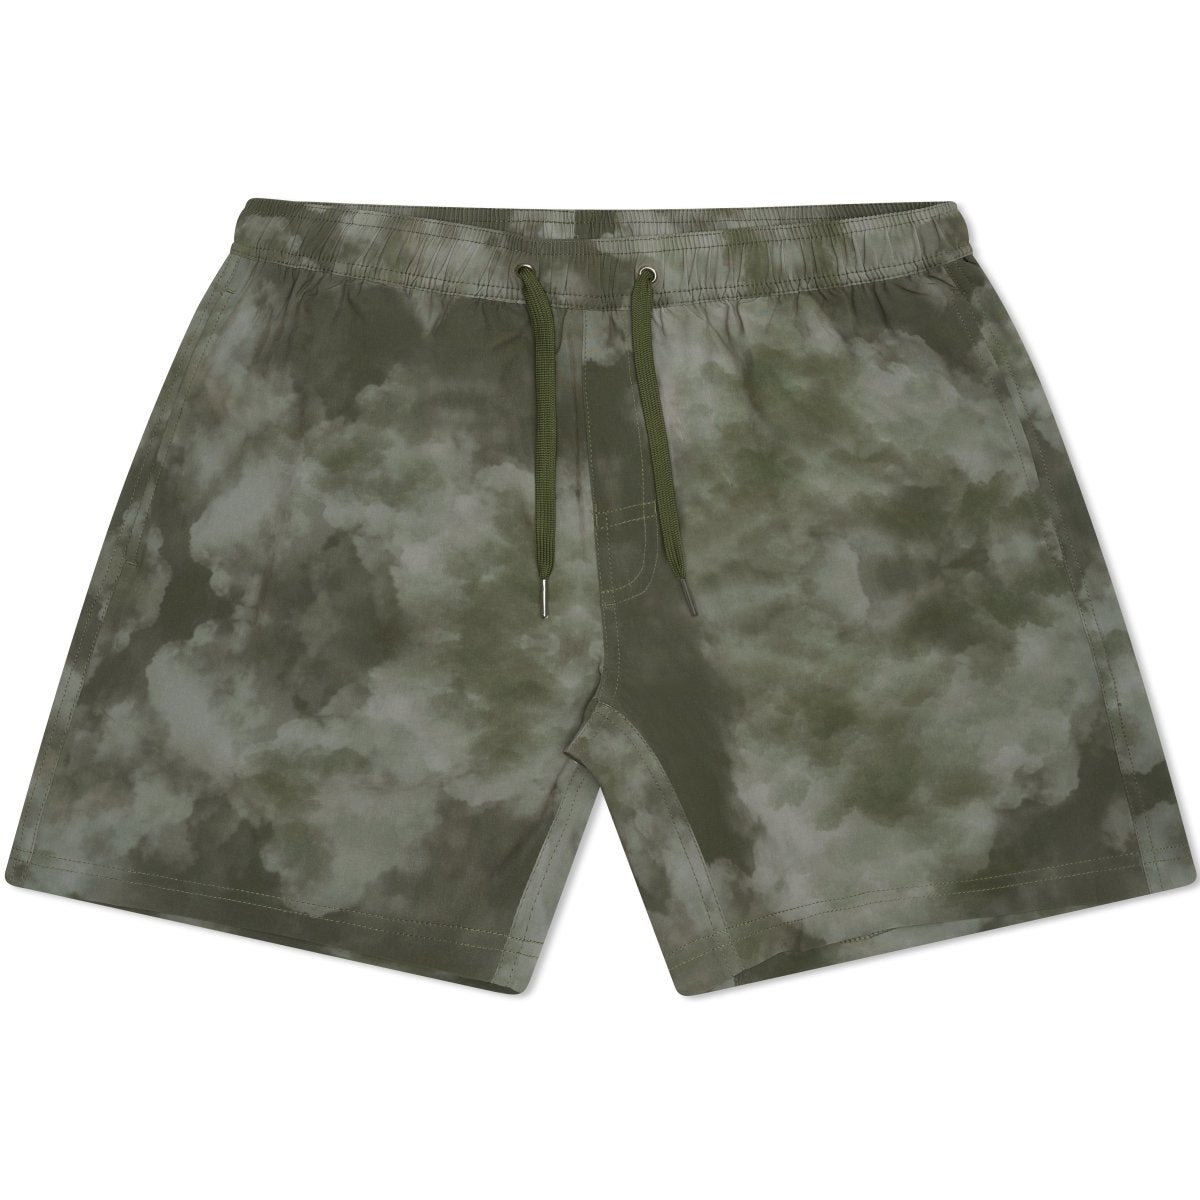 Collard Greens 5” - Green Tie Dye Shorts - Bamboo Ave. - Men's Shorts